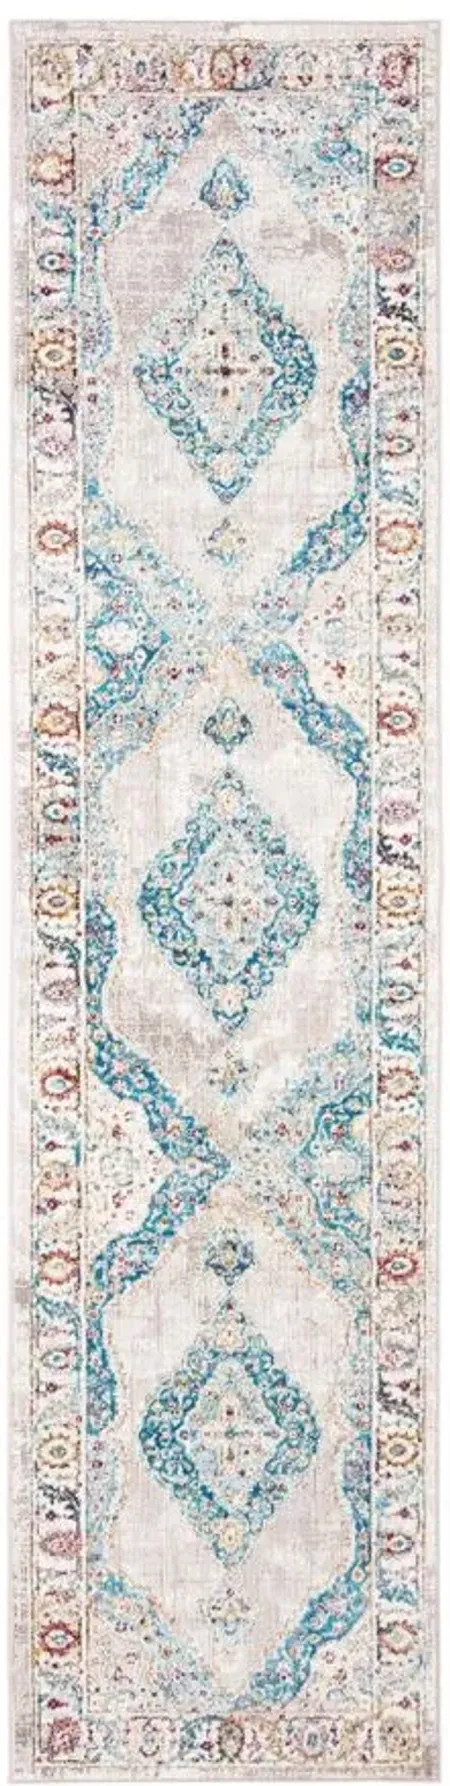 Aleesha Area Rug in Blue / Ivory by Safavieh